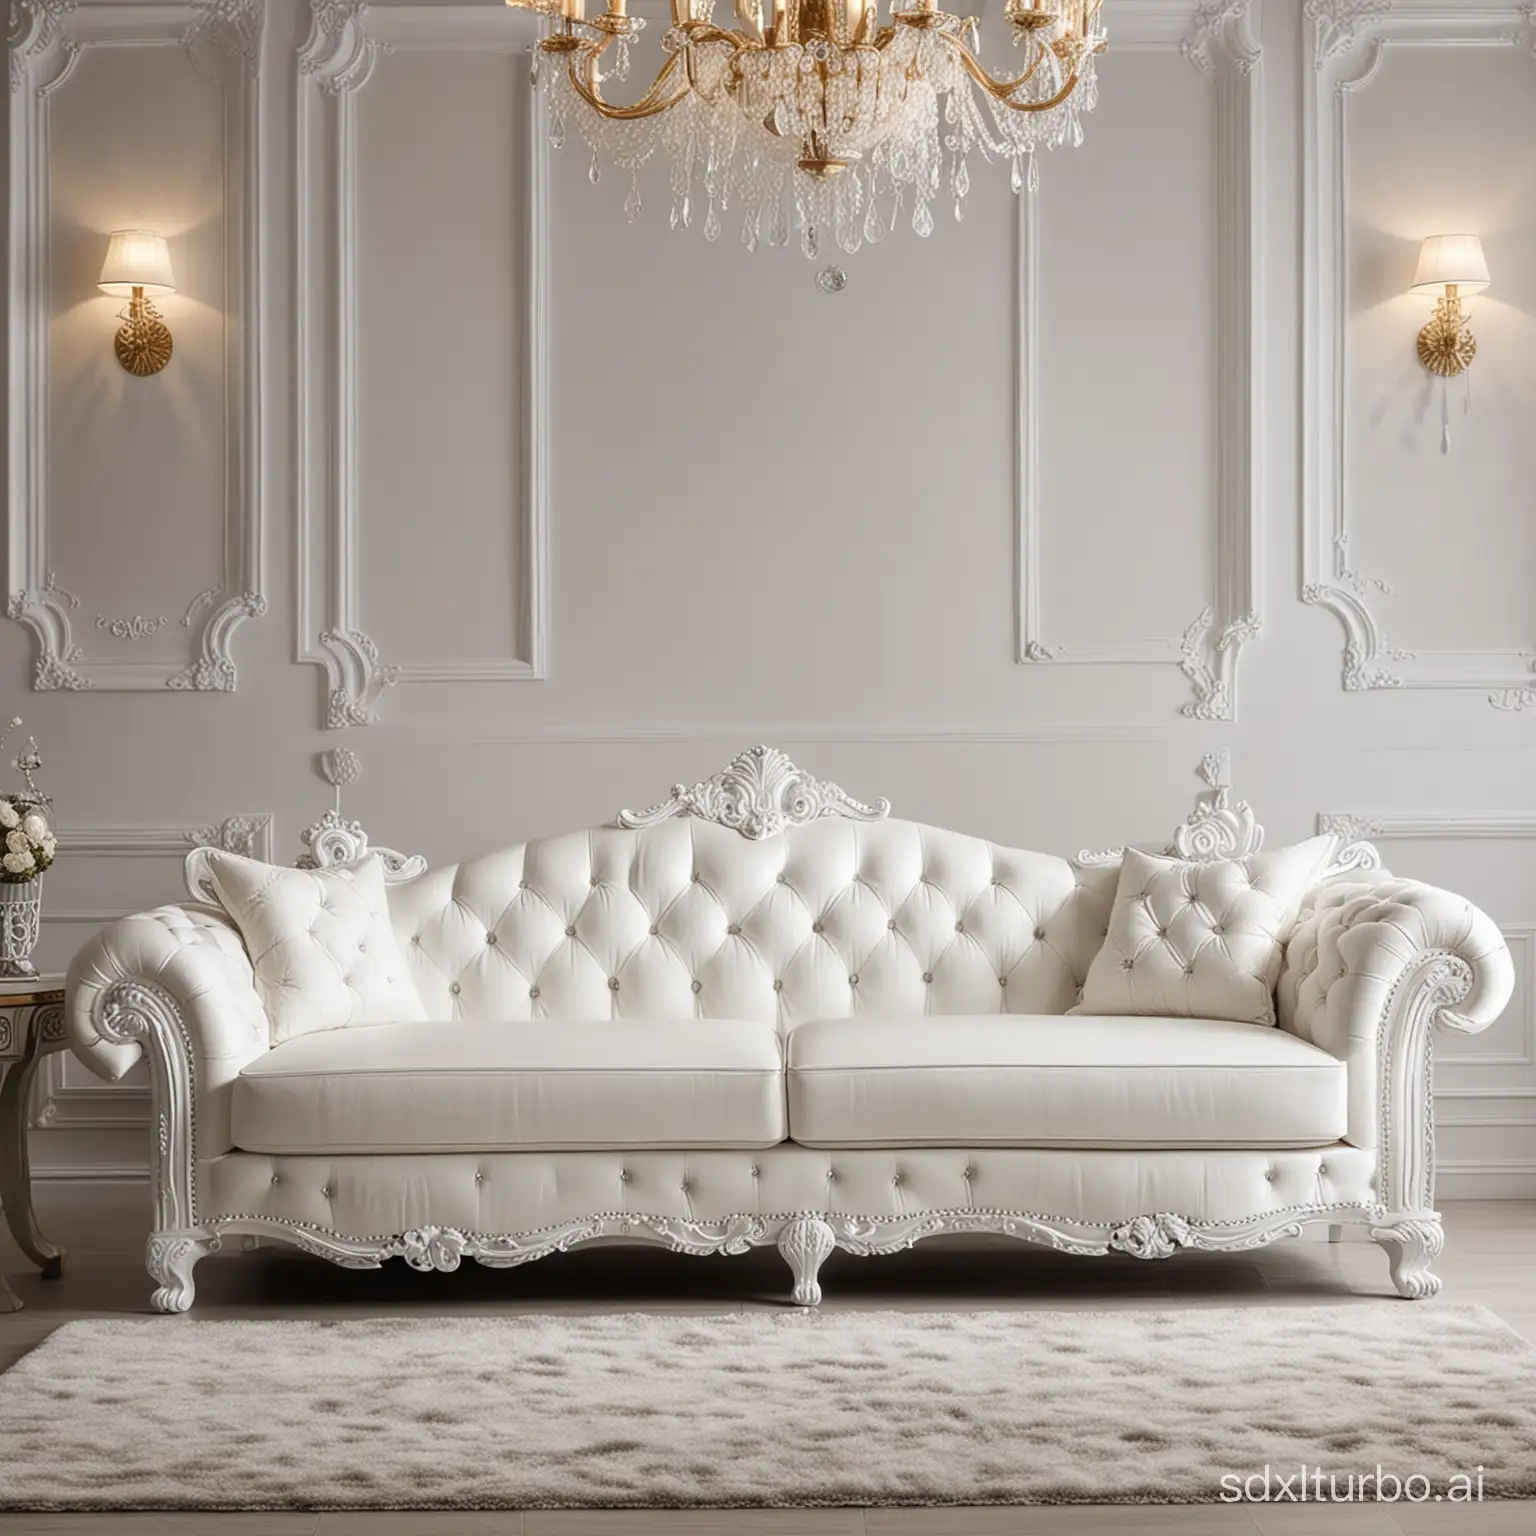 Luxurious-White-Sofa-in-Royal-Setting